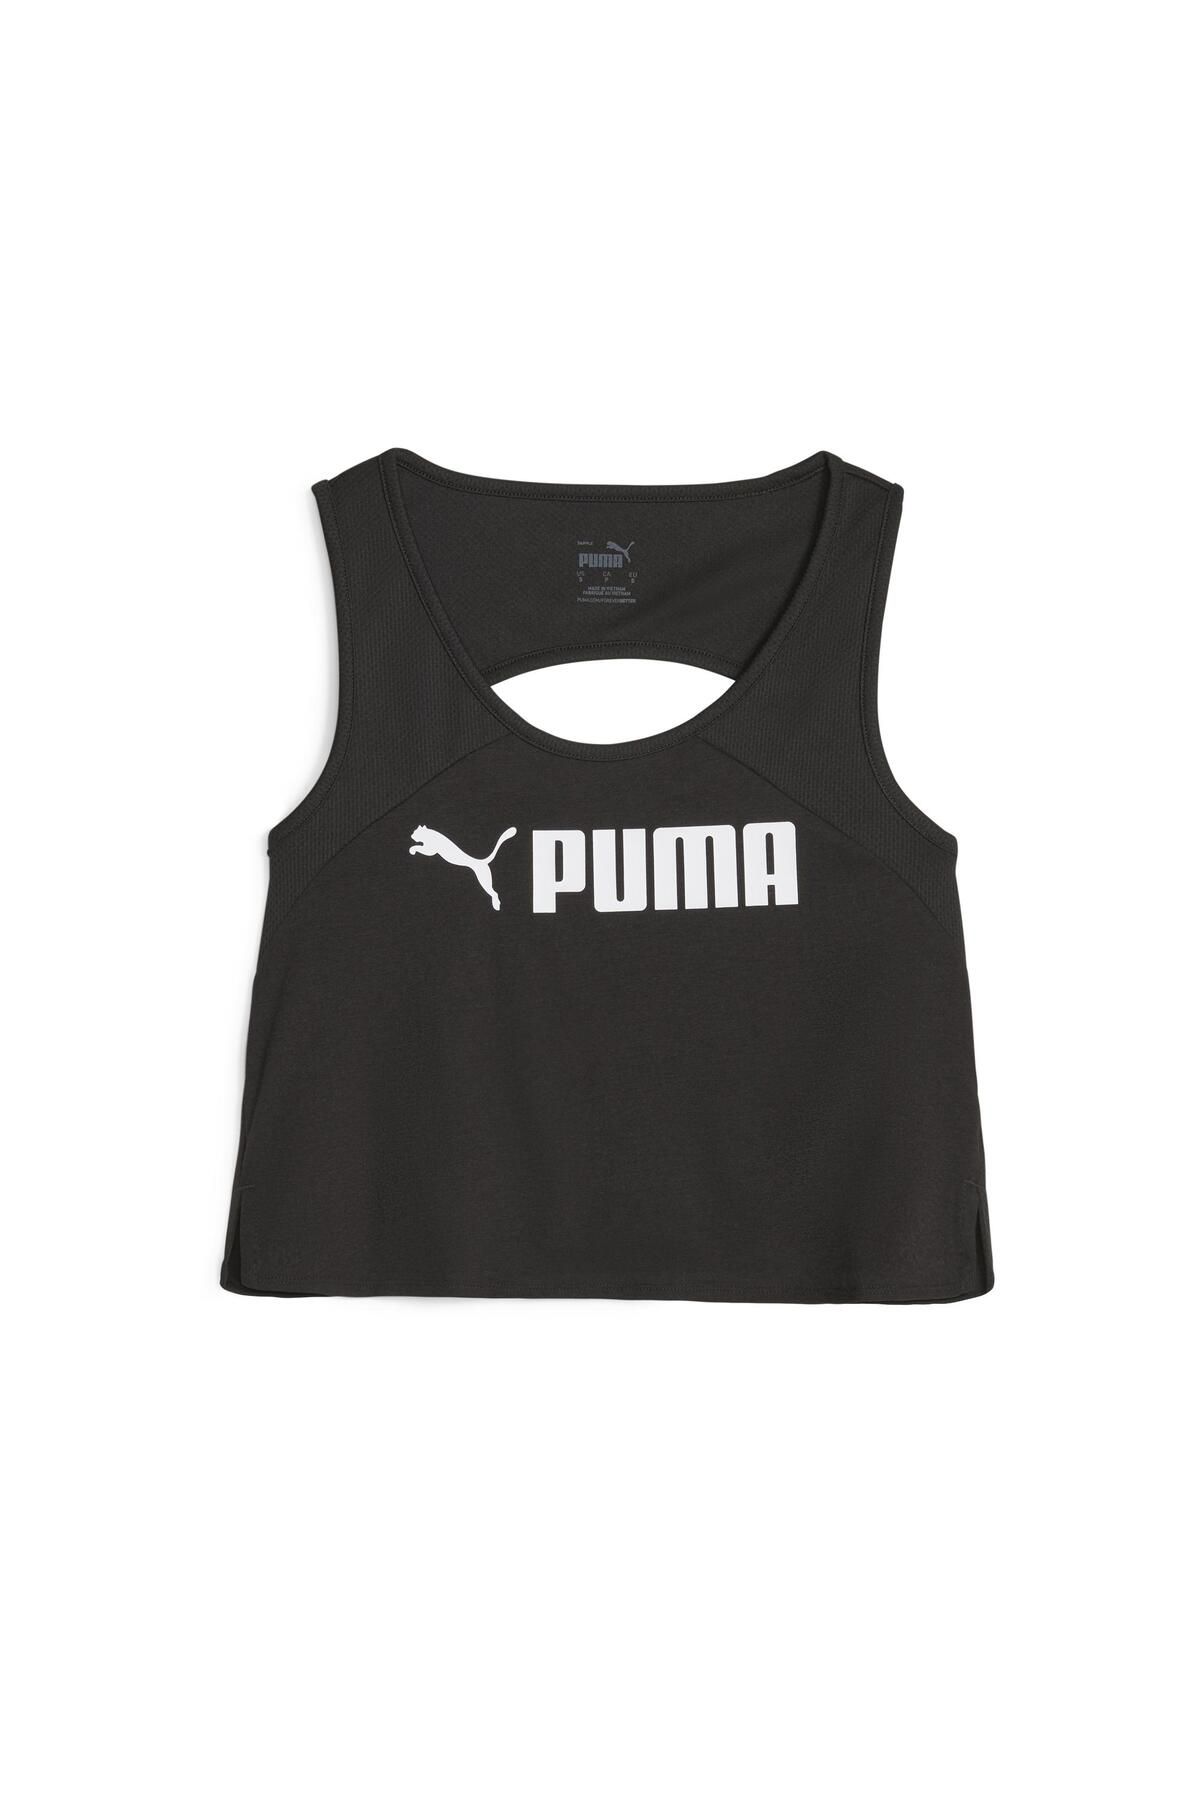 Puma Puma تانک تناسب اندام بدون چربی